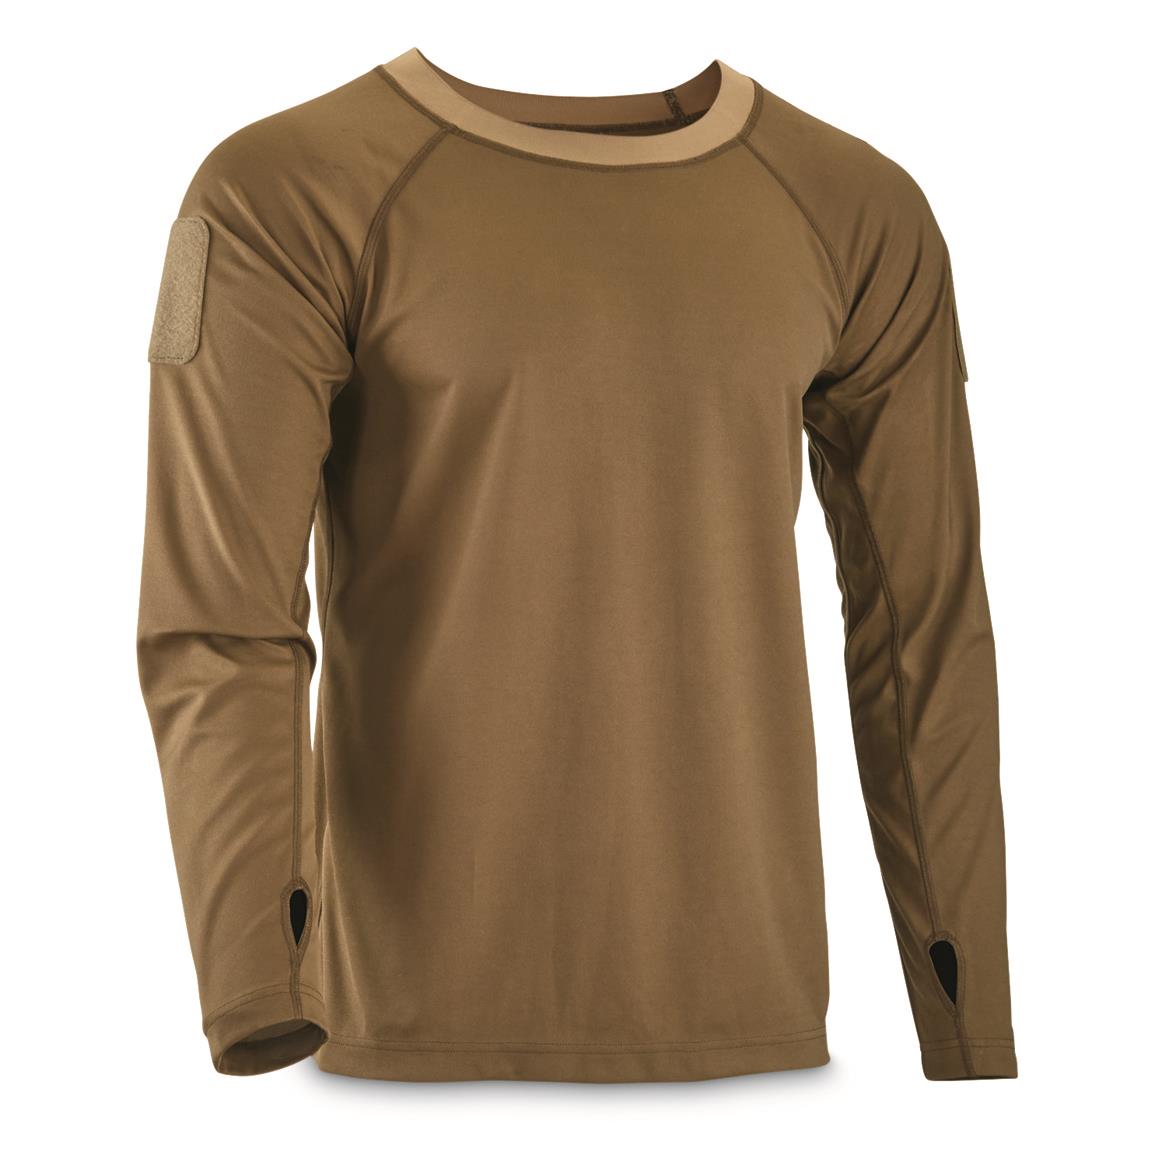 Brooklyn Armed Forces Tactical Mediumweight Base Layer Shirt, Tan 499